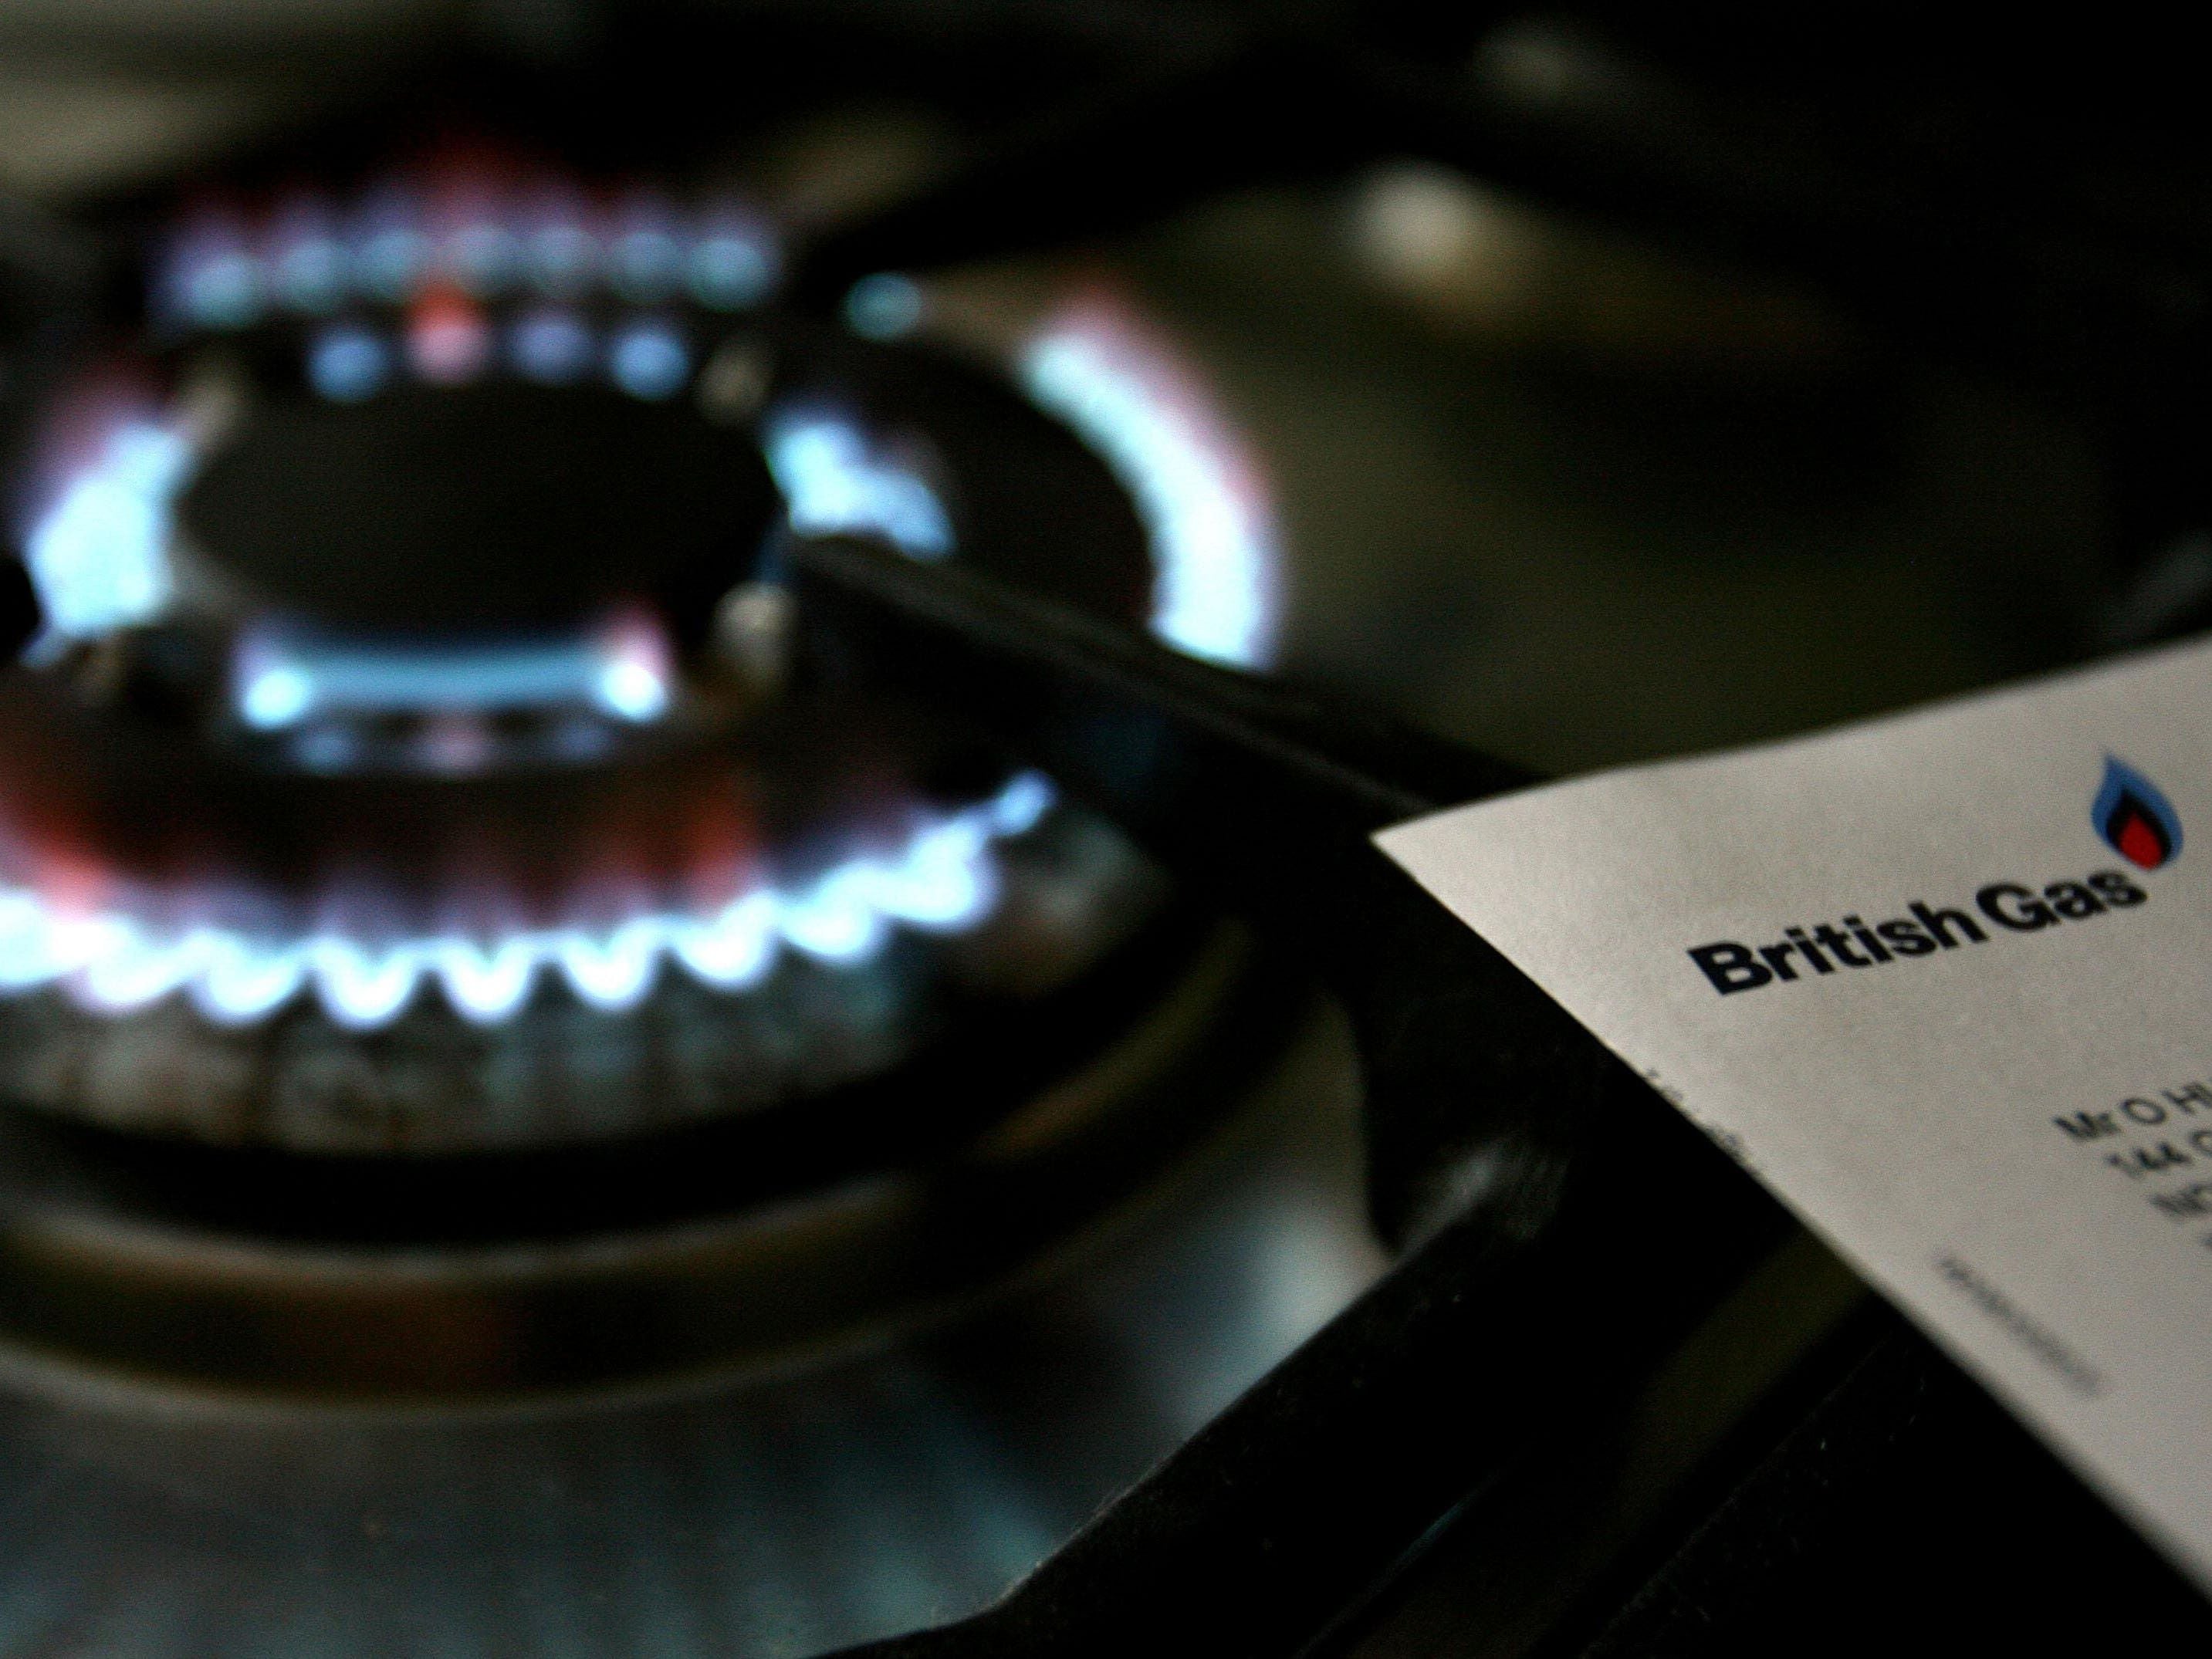 British Gas owner sees profits slump as energy markets stabilise